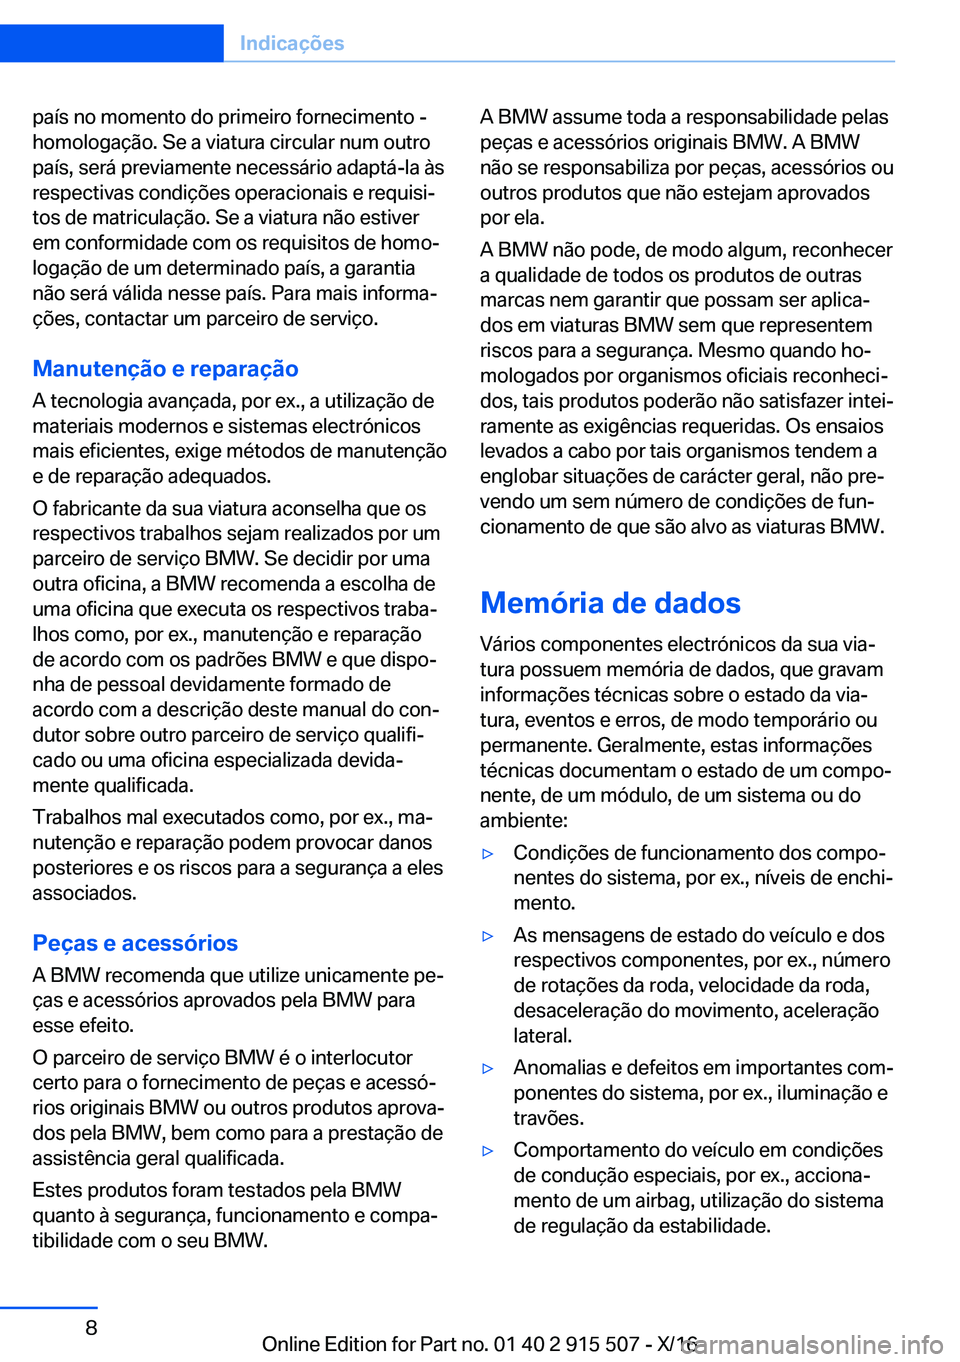 BMW X5 2017  Manual do condutor (in Portuguese) �p�a�í�s� �n�o� �m�o�m�e�n�t�o� �d�o� �p�r�i�m�e�i�r�o� �f�o�r�n�e�c�i�m�e�n�t�o� �-
�h�o�m�o�l�o�g�a�ç�ã�o�.� �S�e� �a� �v�i�a�t�u�r�a� �c�i�r�c�u�l�a�r� �n�u�m� �o�u�t�r�o
�p�a�í�s�,� �s�e�r�á�